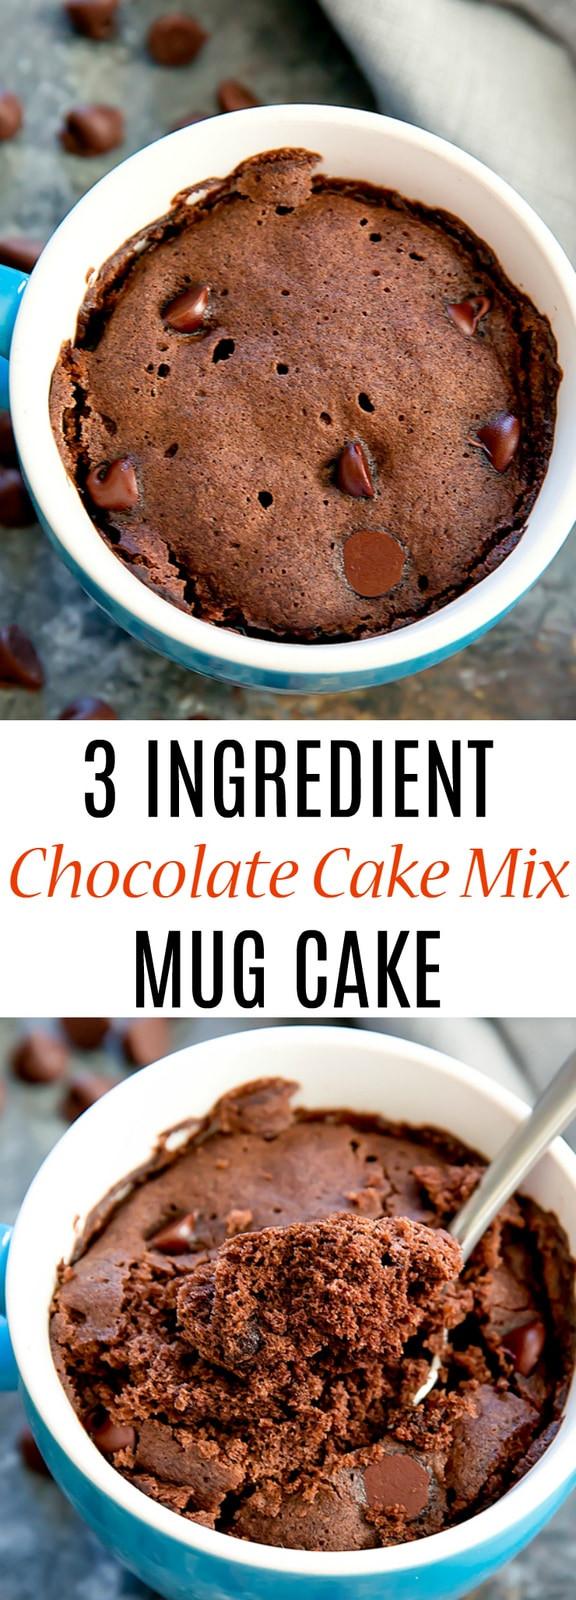 Mug Cake With Cake Mix And No Egg
 3 Ingre nt Chocolate Cake Mix Mug Cake Kirbie s Cravings